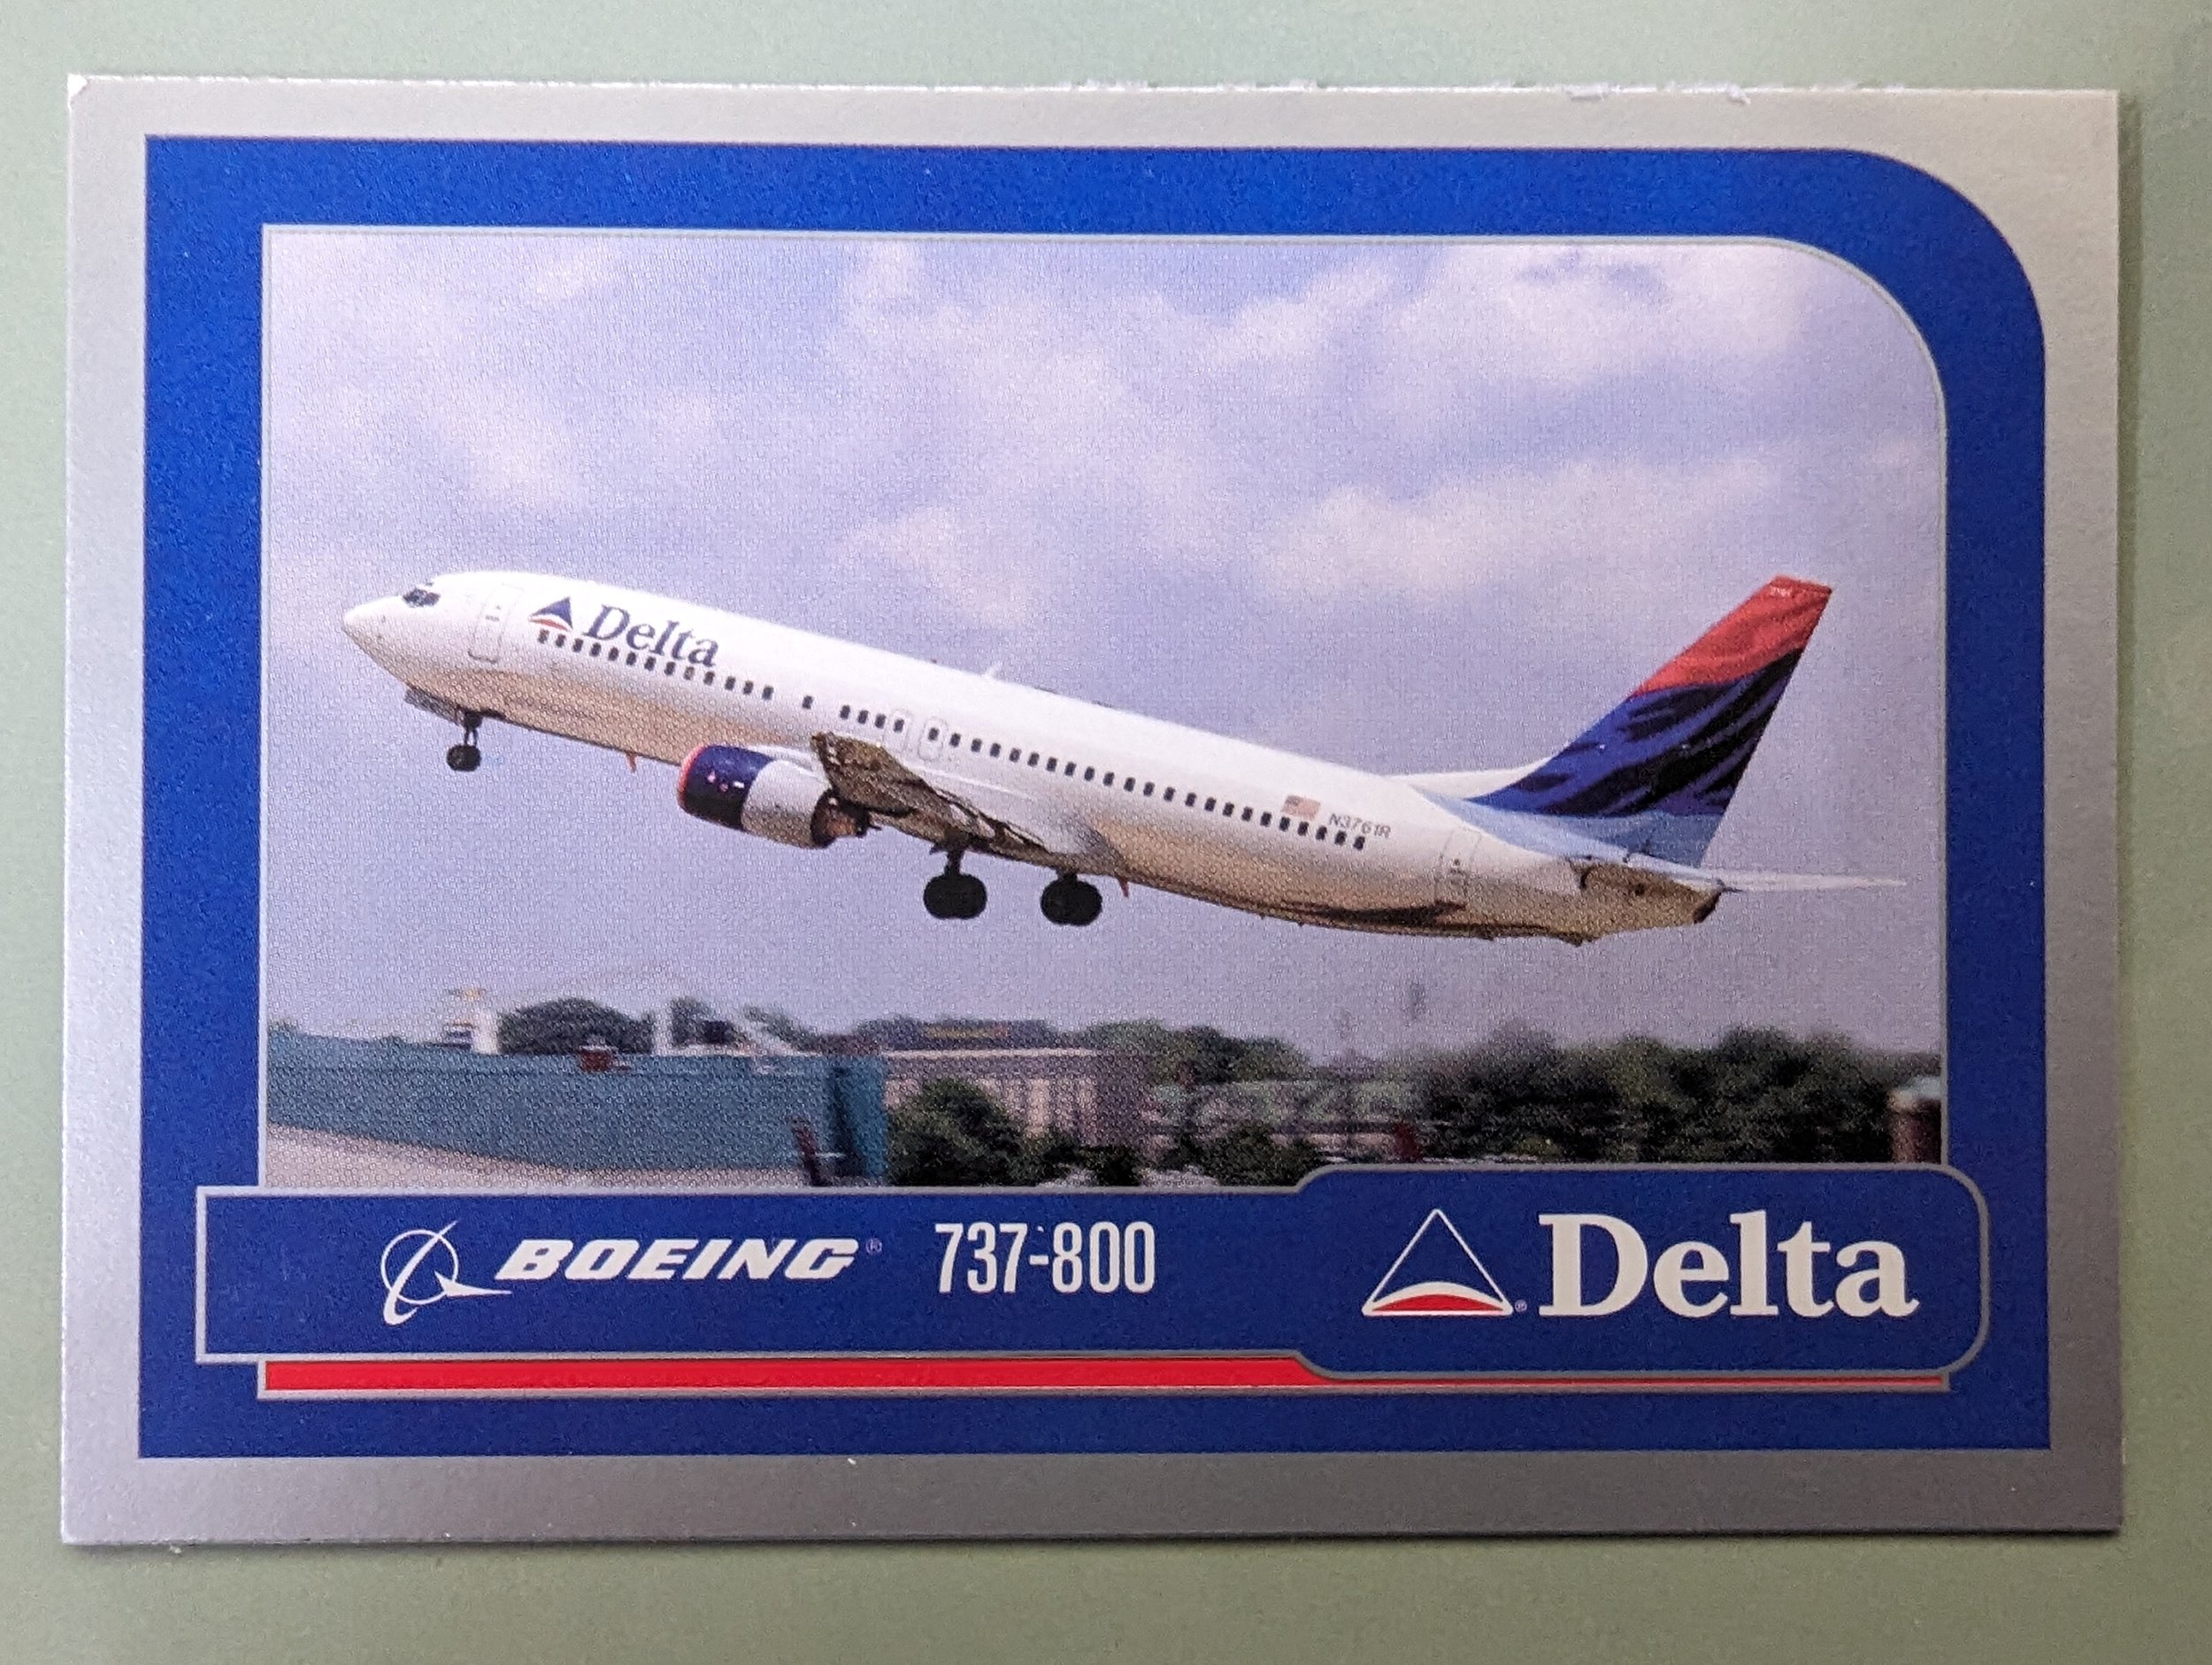 2003 Card #5 737-800